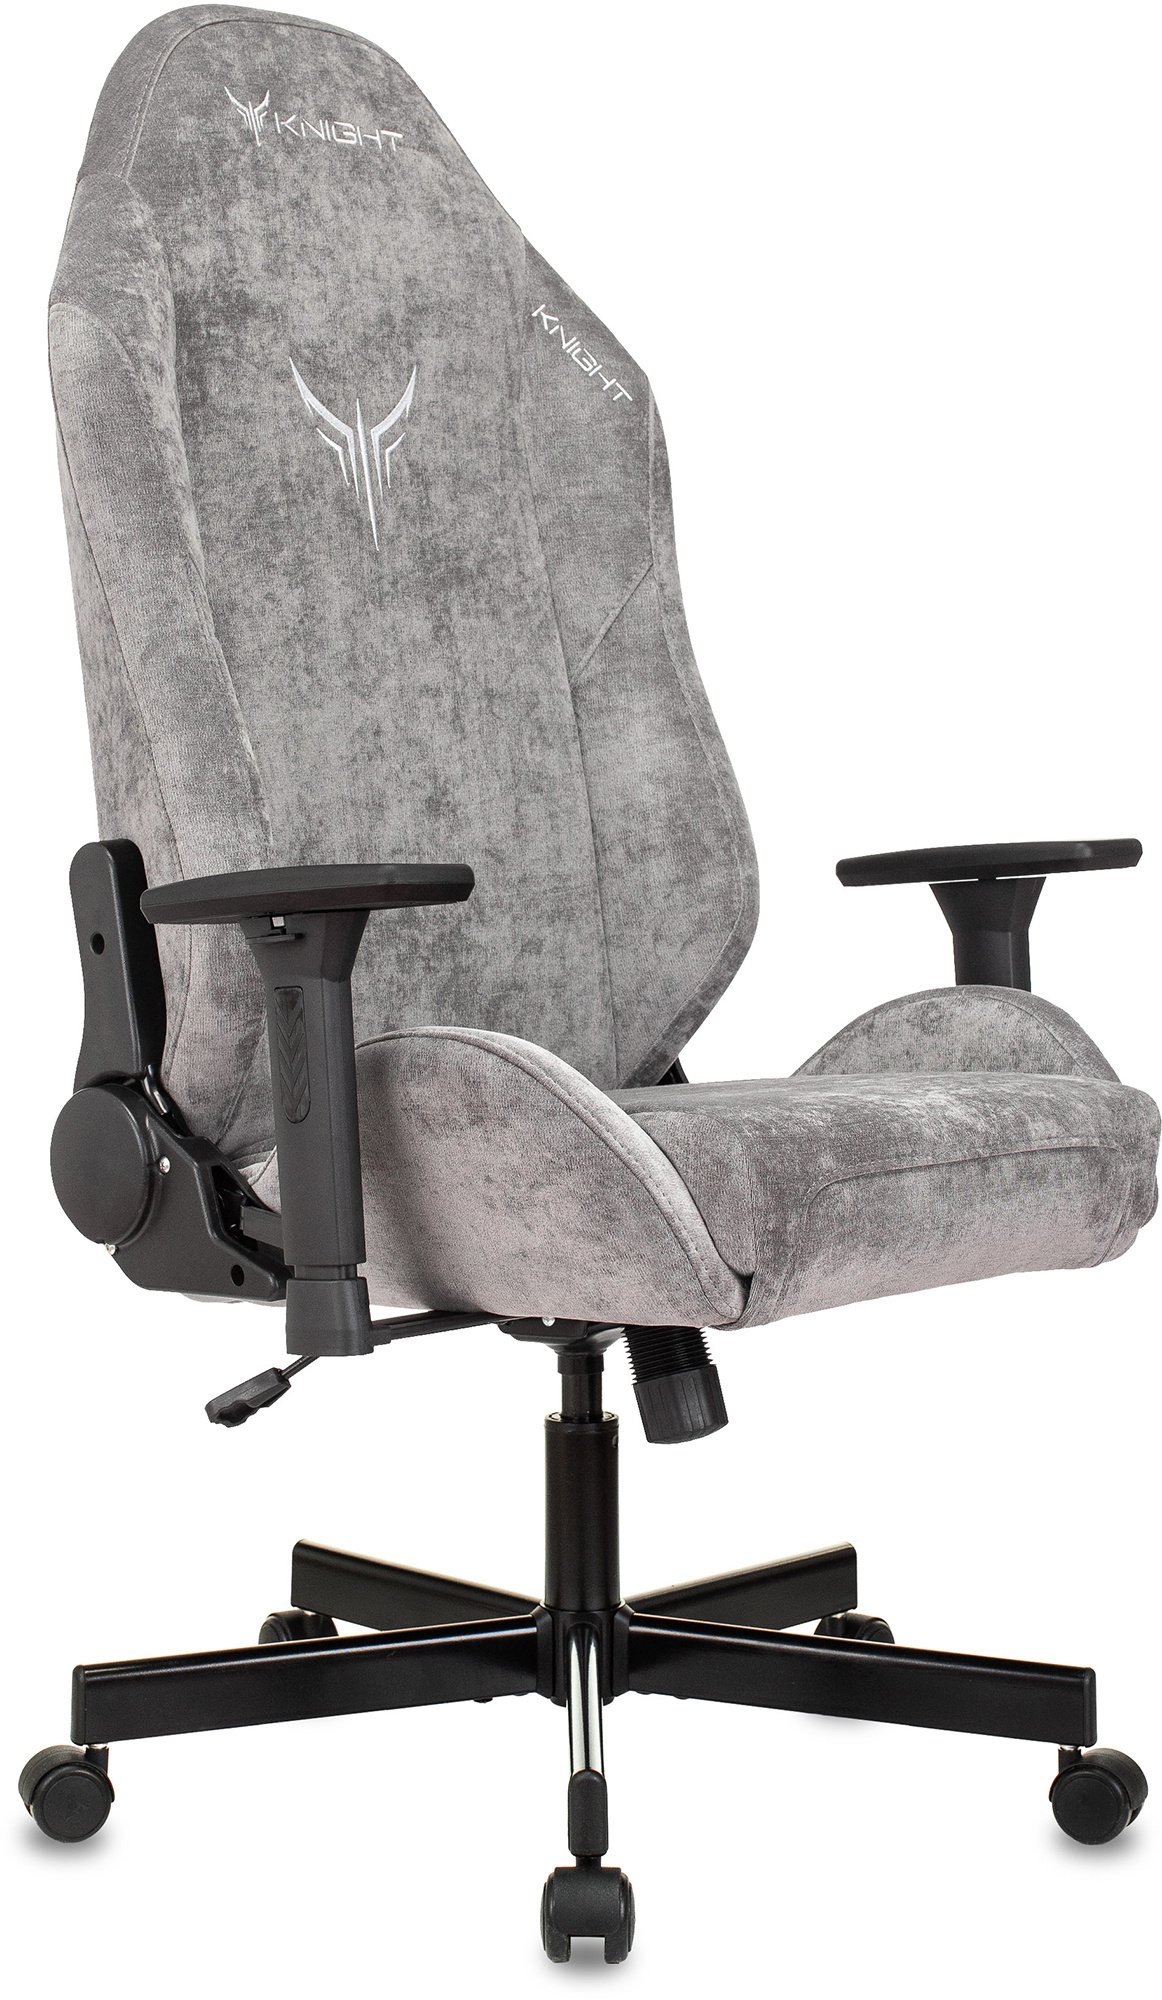 Кресло игровое Knight N1, обивка: ткань, цвет: серый (KNIGHT N1 GREY) от магазина Buro.store